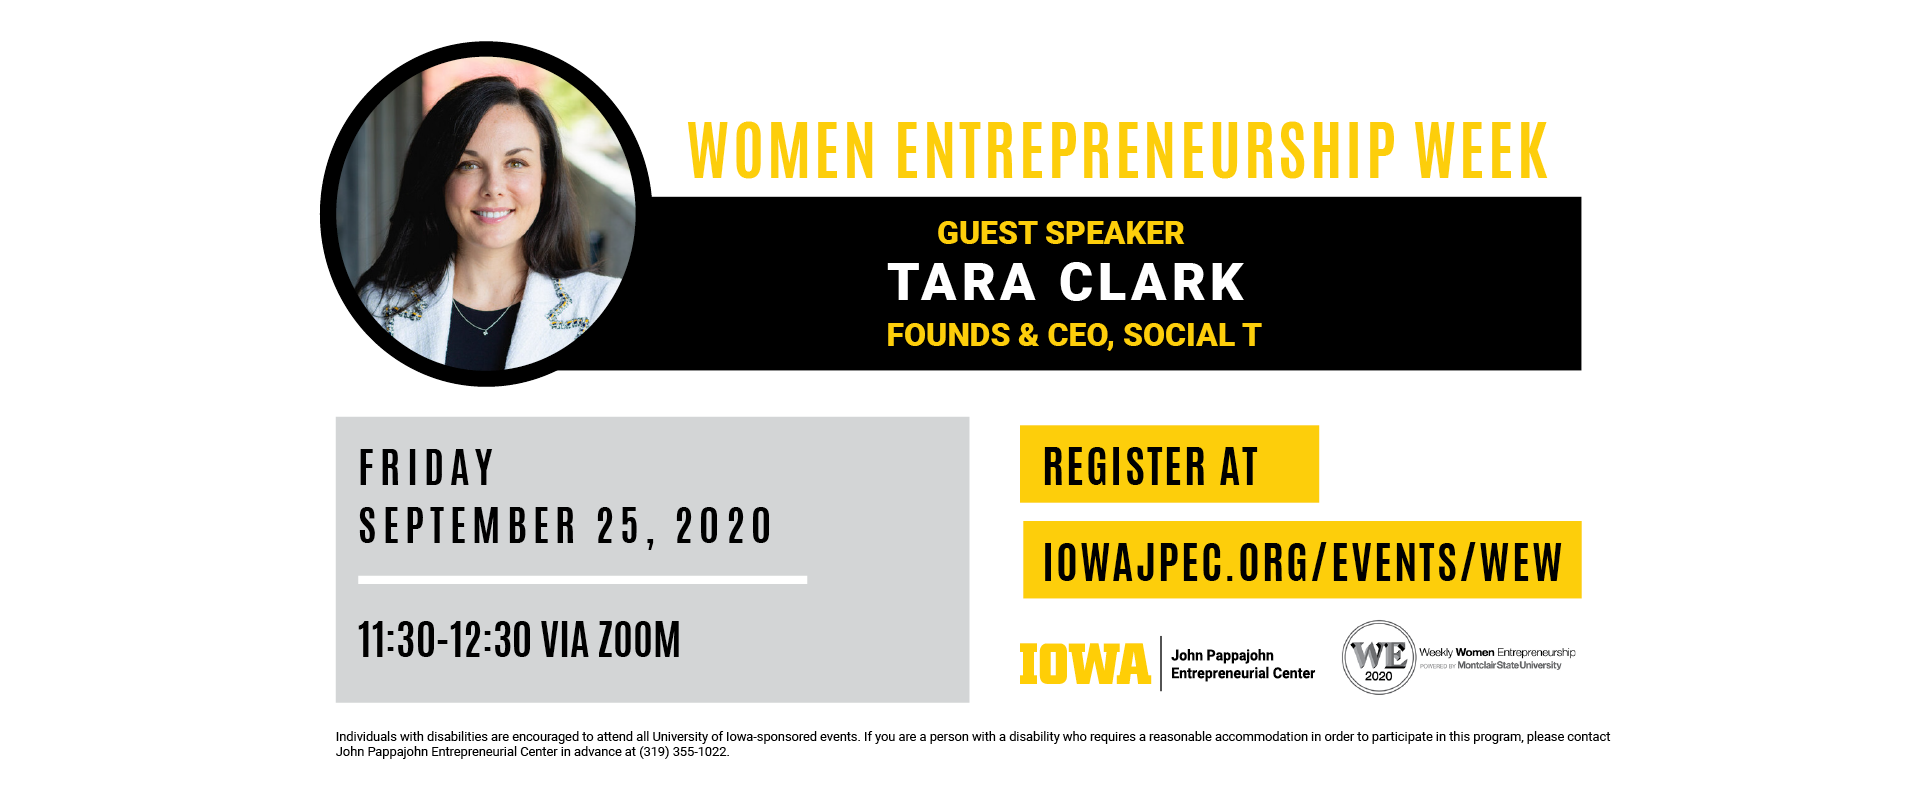 Entrepreneurship Week 2020 Guest Speaker